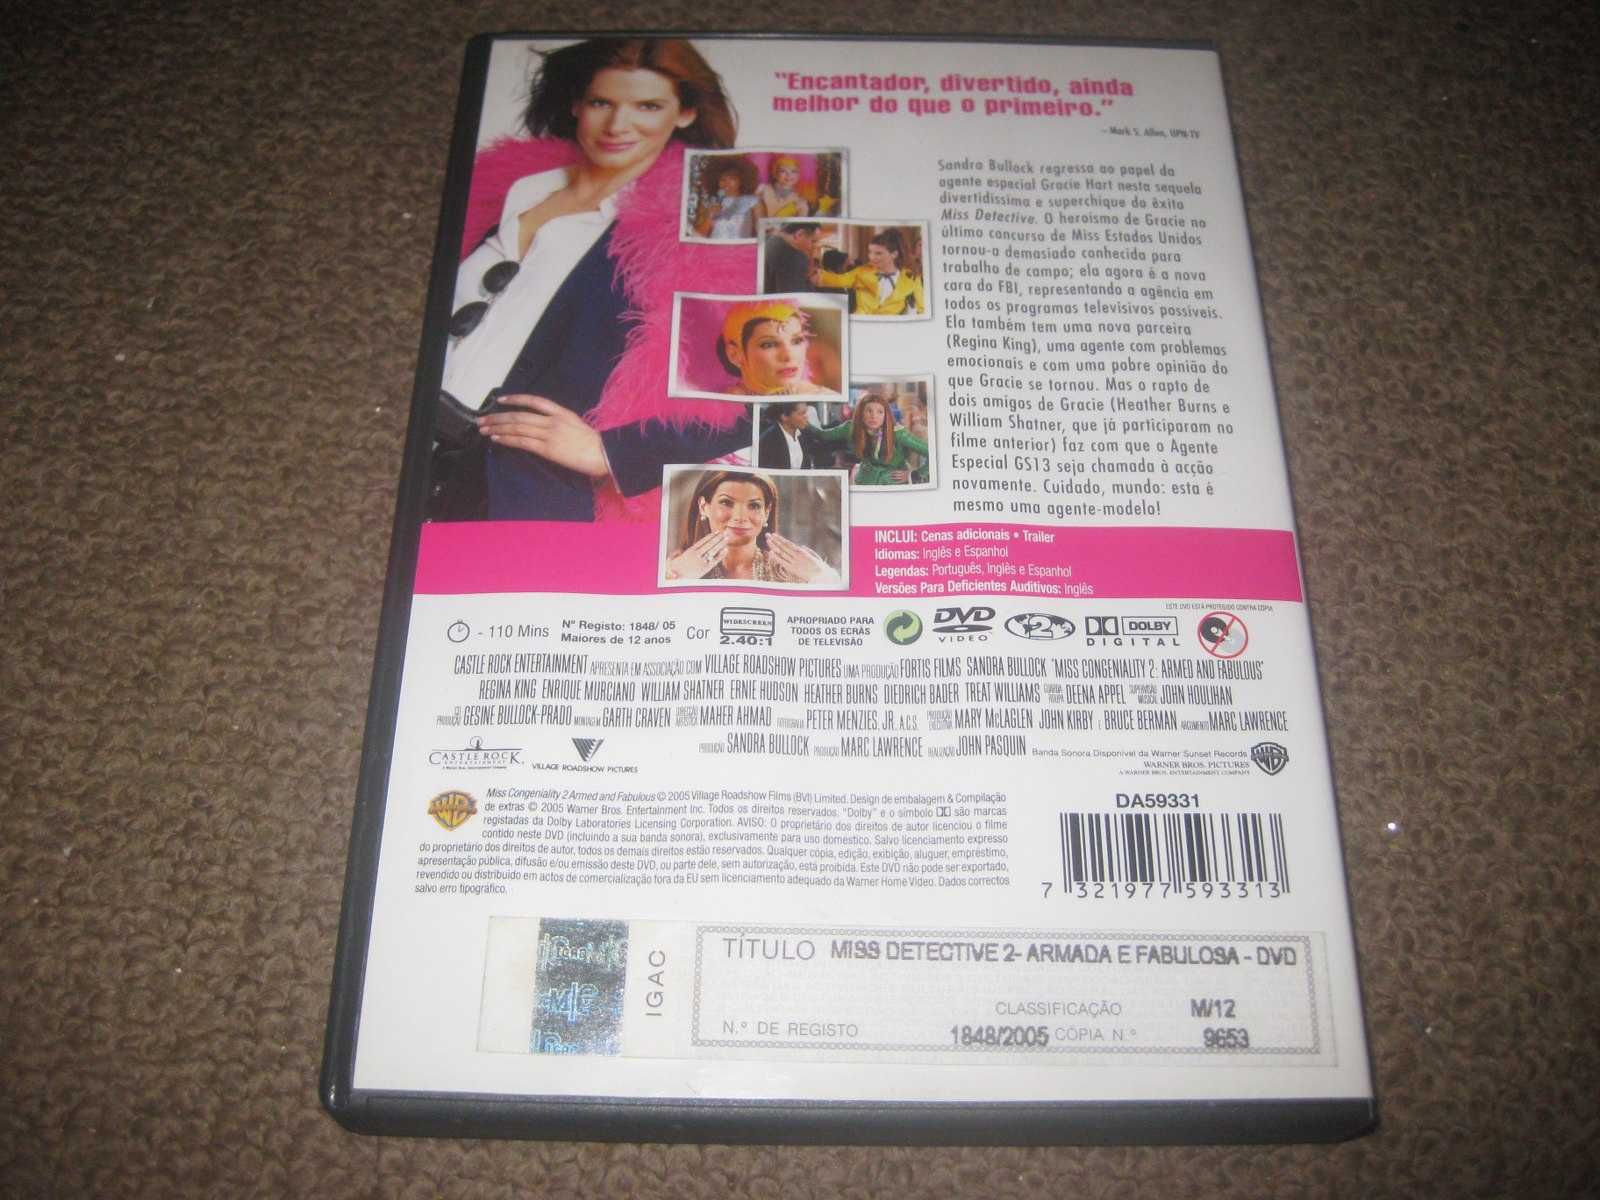 DVD "Miss Detective 2" com Sandra Bullock